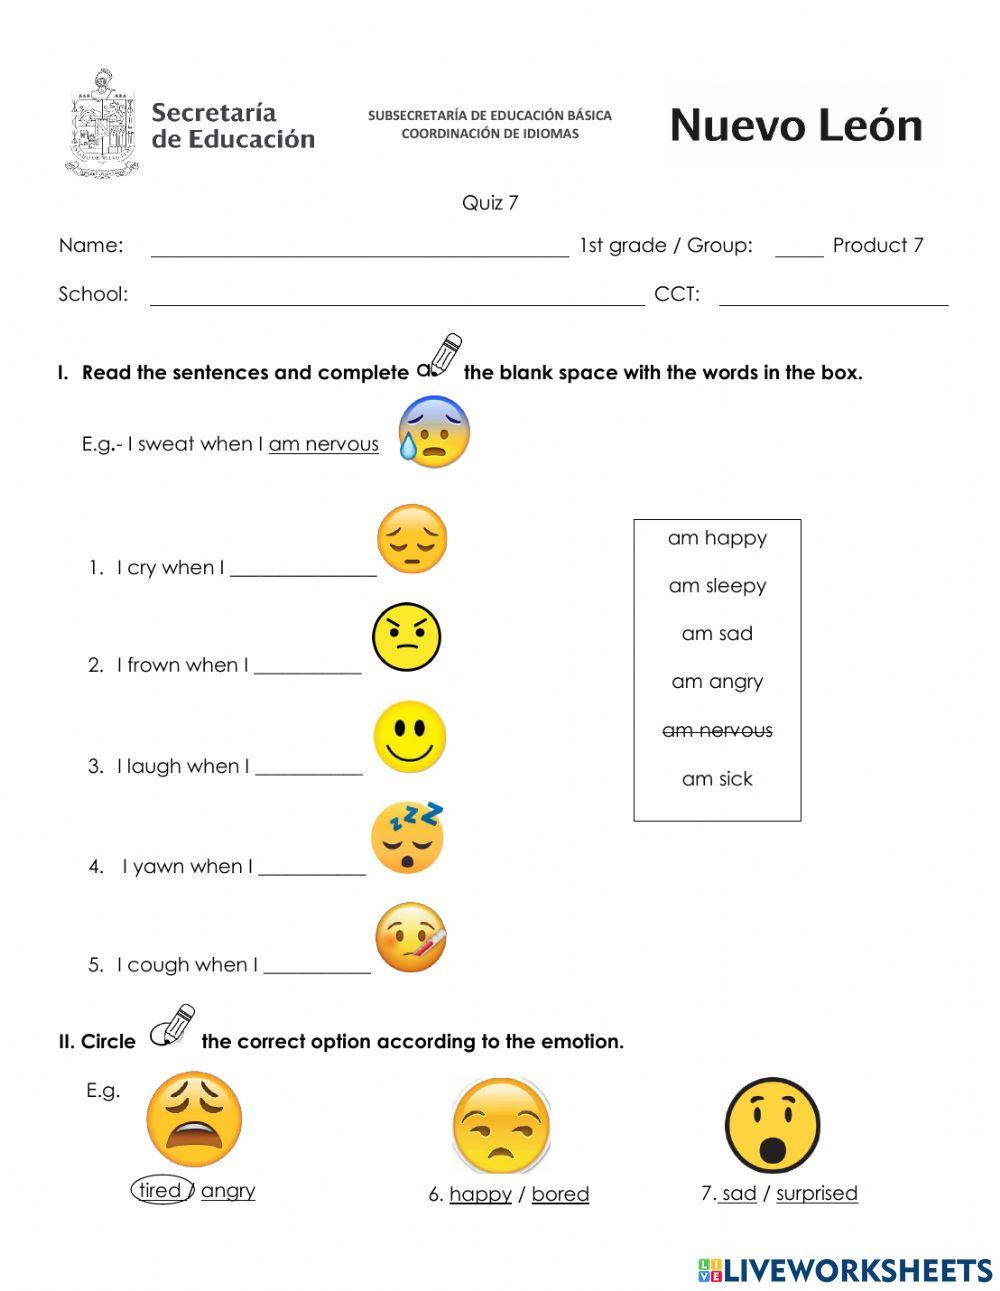 March Quiz - 1st Grade - Emotions